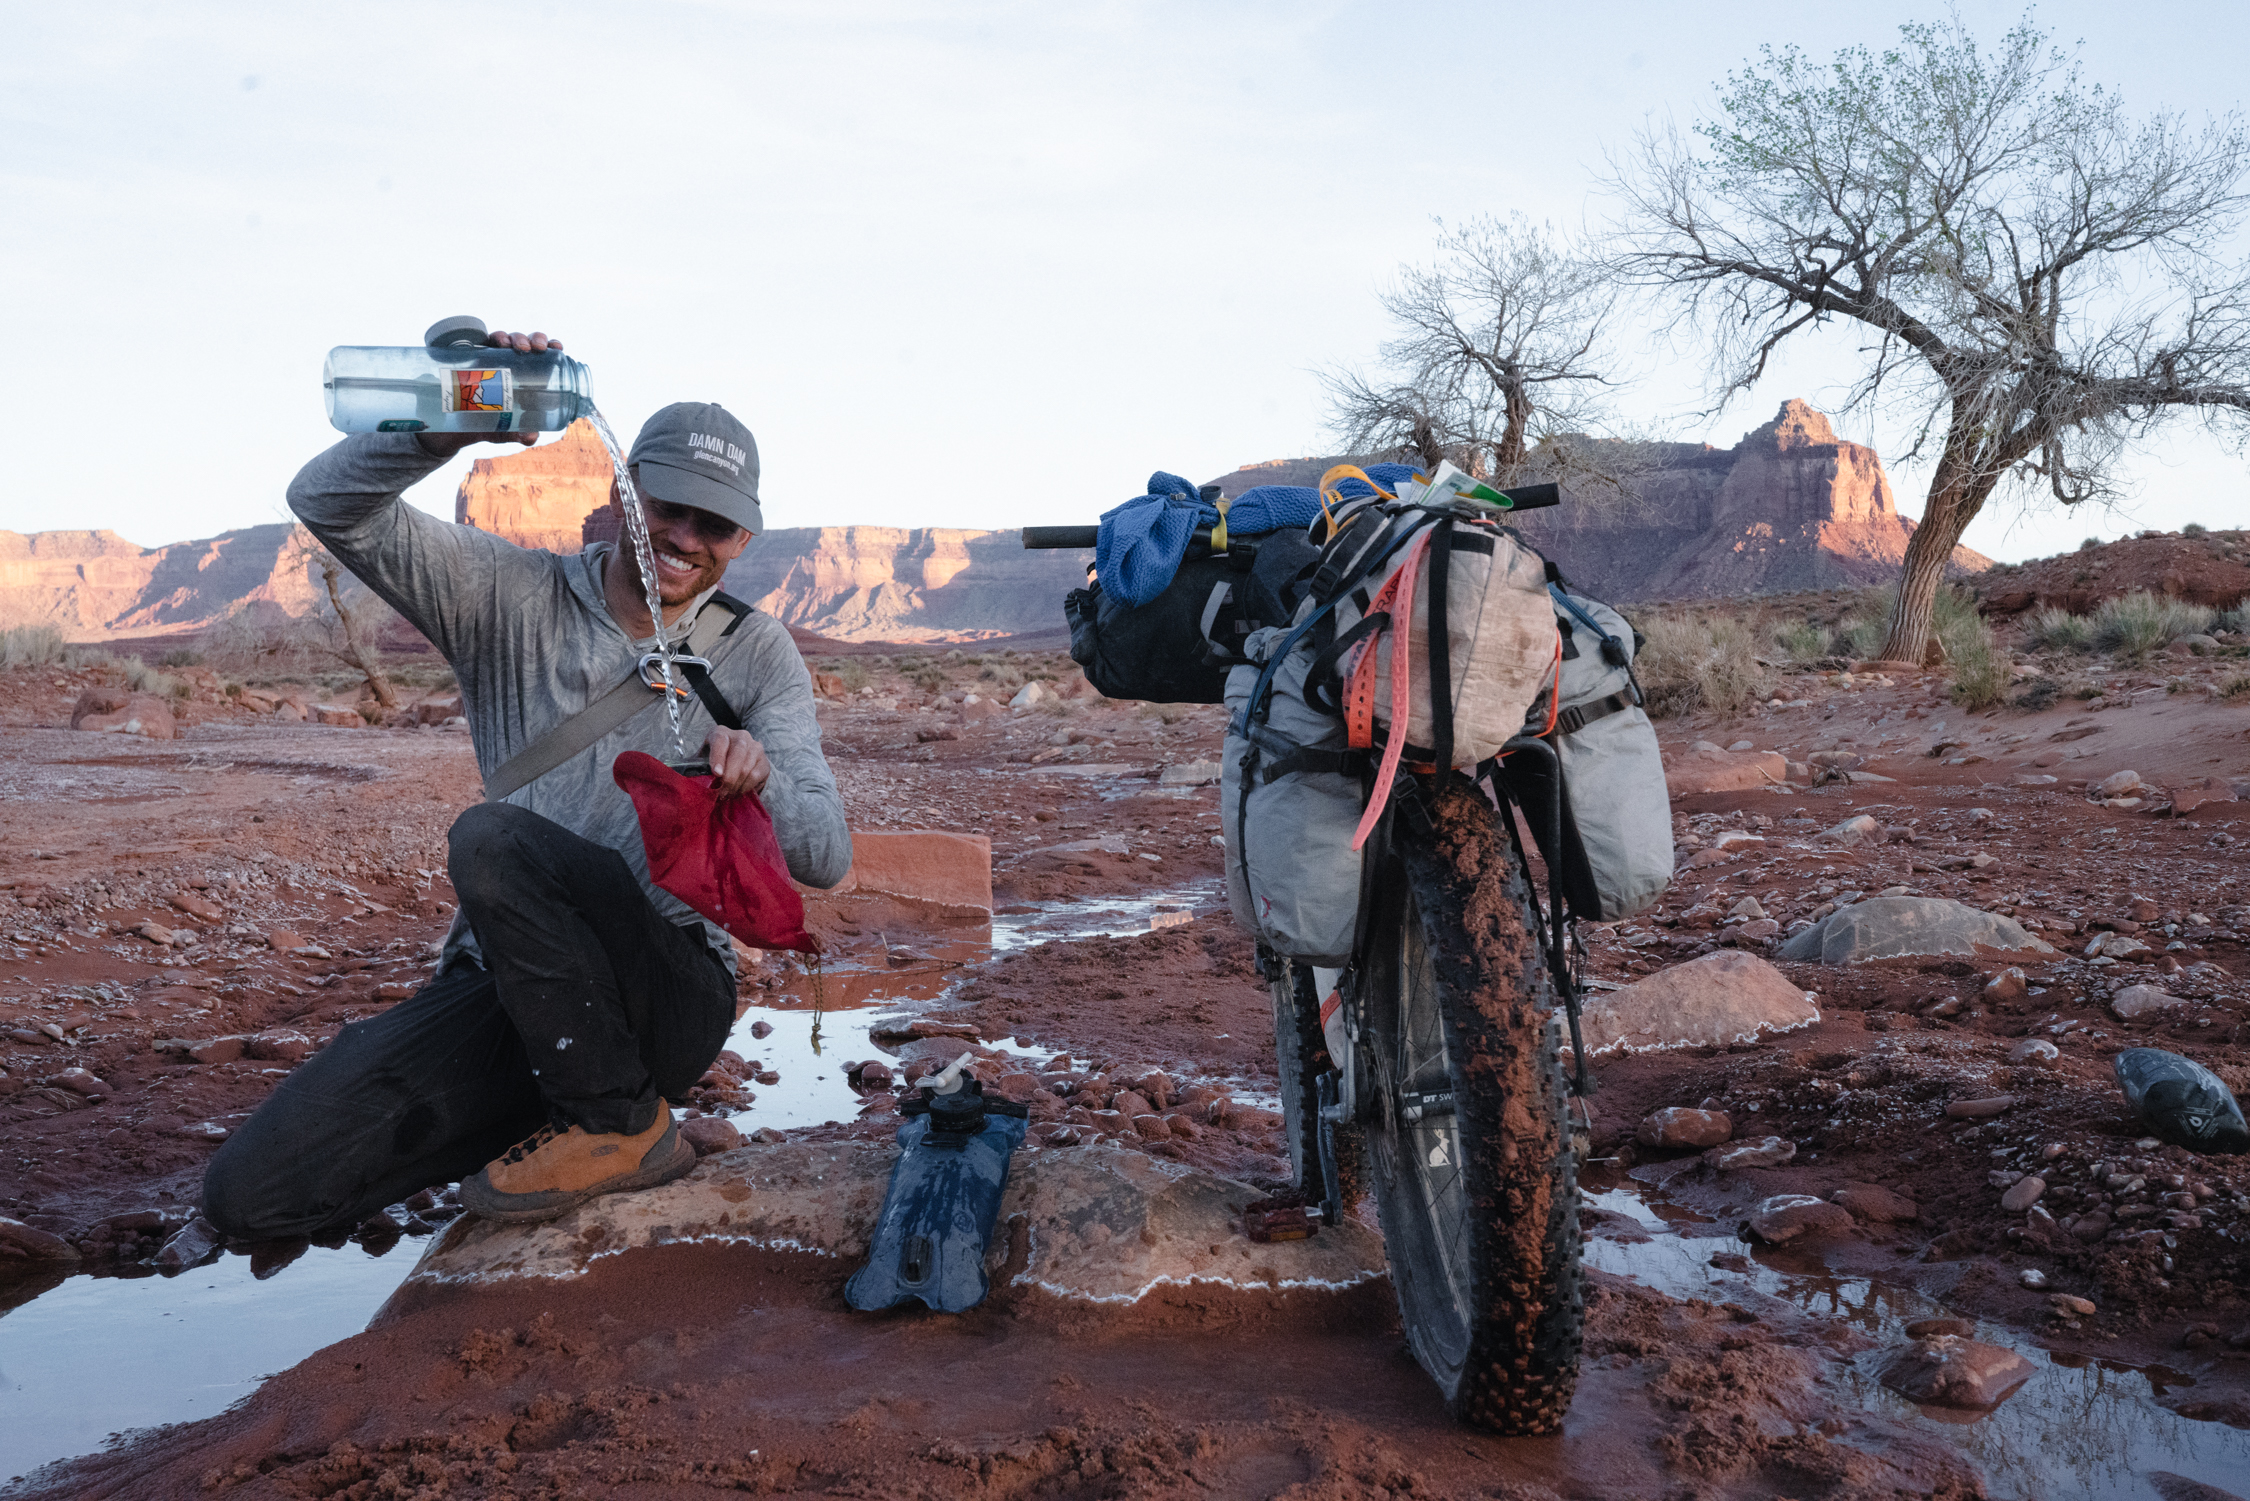 Steve gathering water at camp during his bikepacking trip